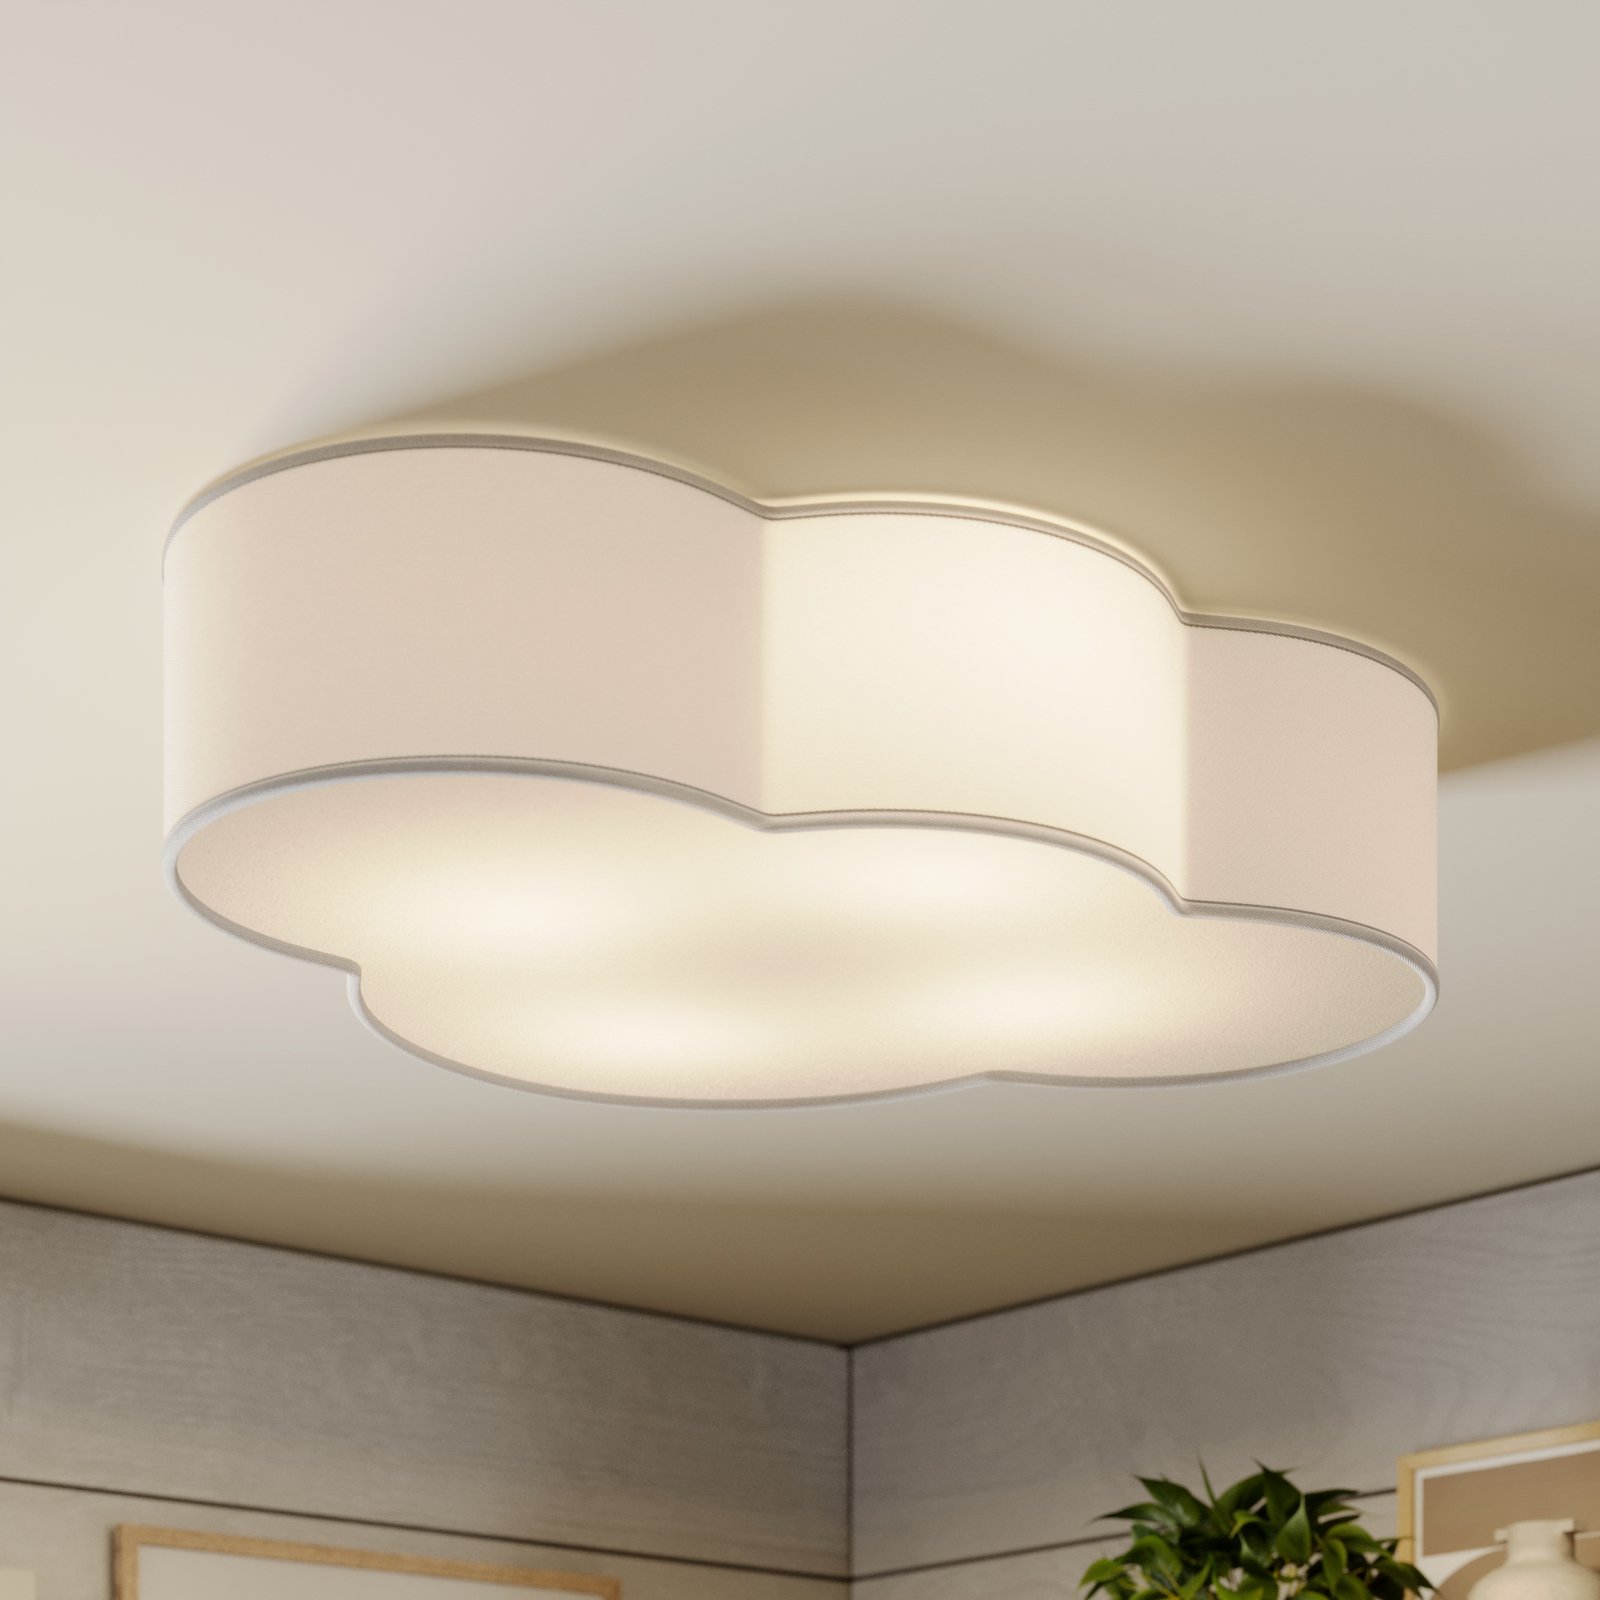 Cloud ceiling light made of textile, length 62 cm, white